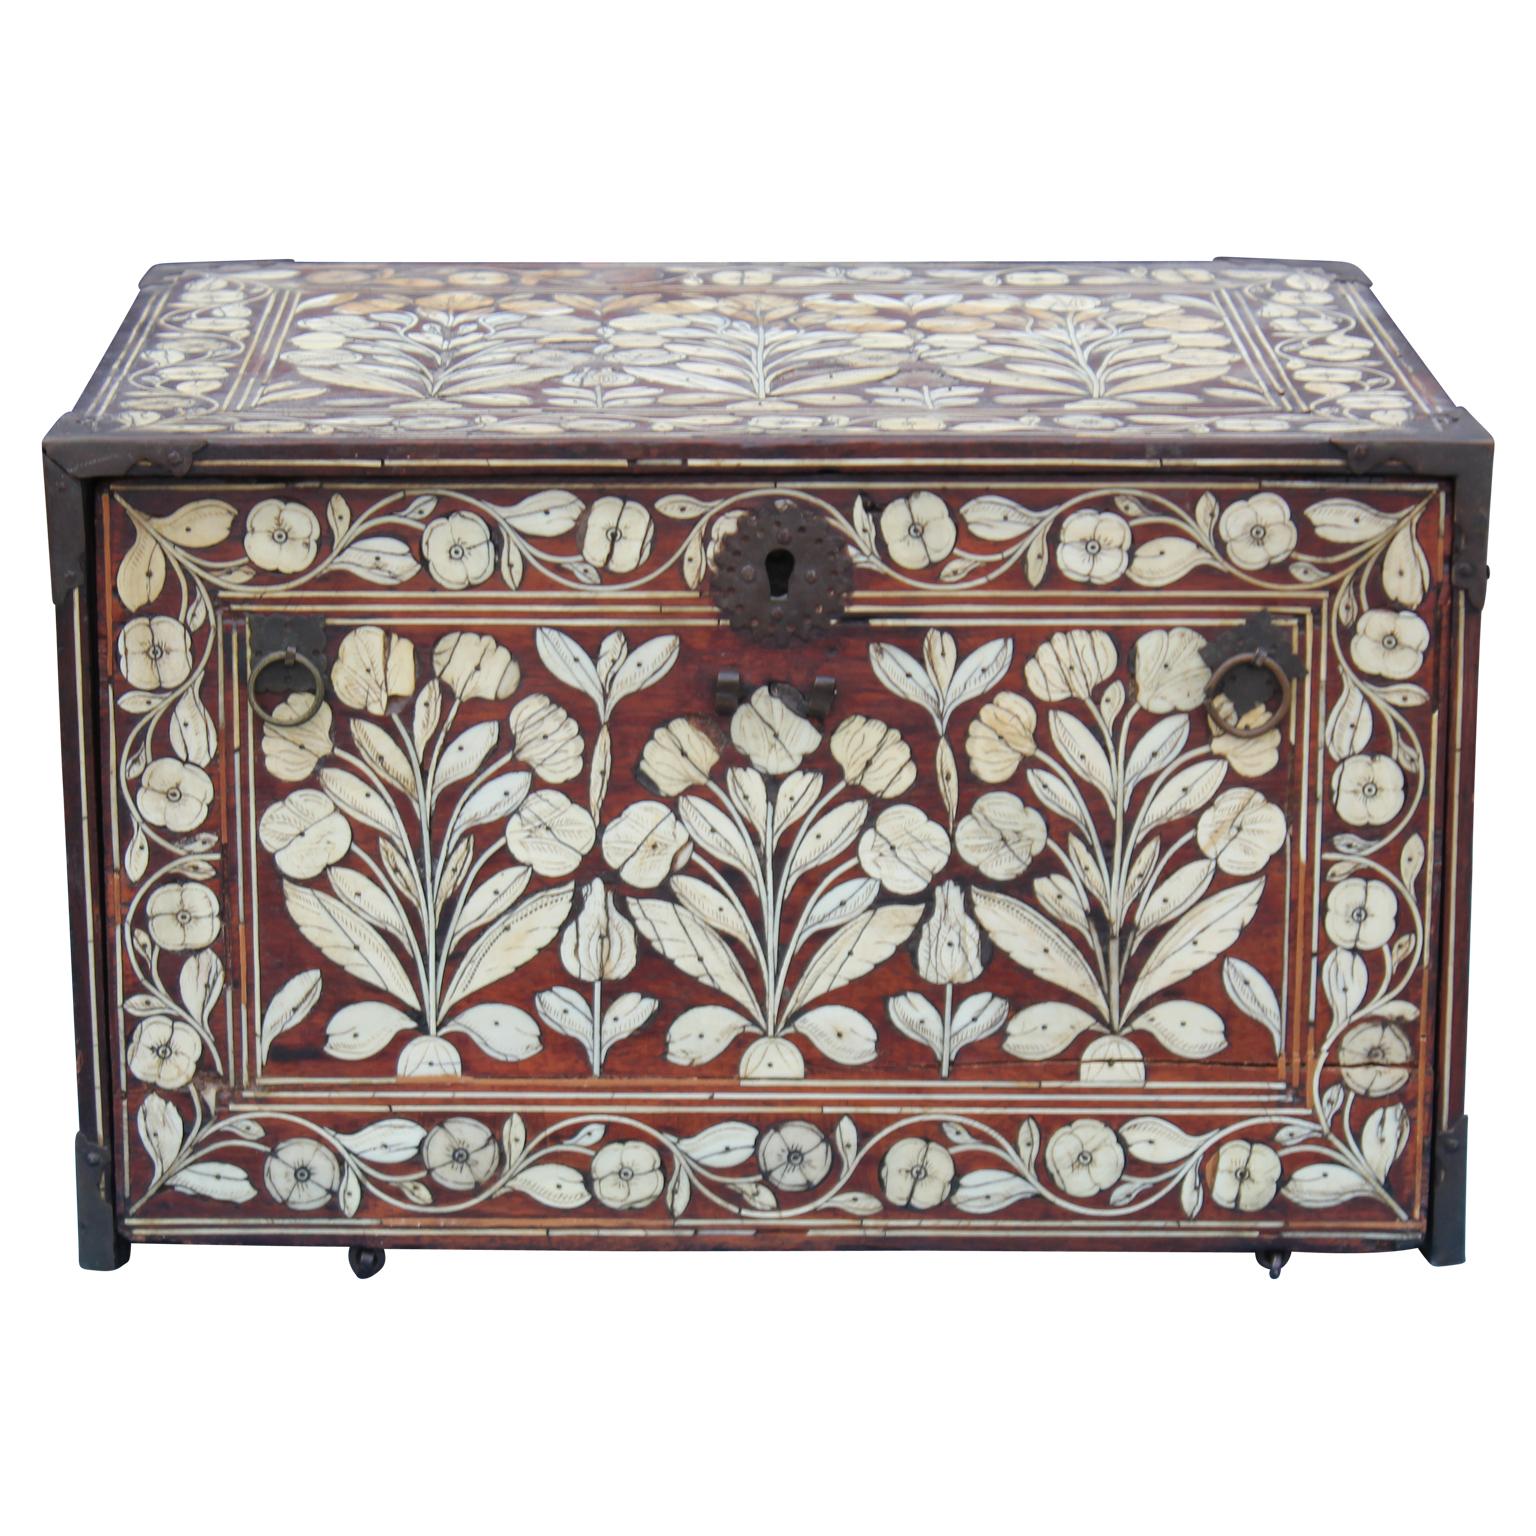 Beautiful Indo-Portuguese Mughal India Bone-Inlaid Fall Front Cabinet Box